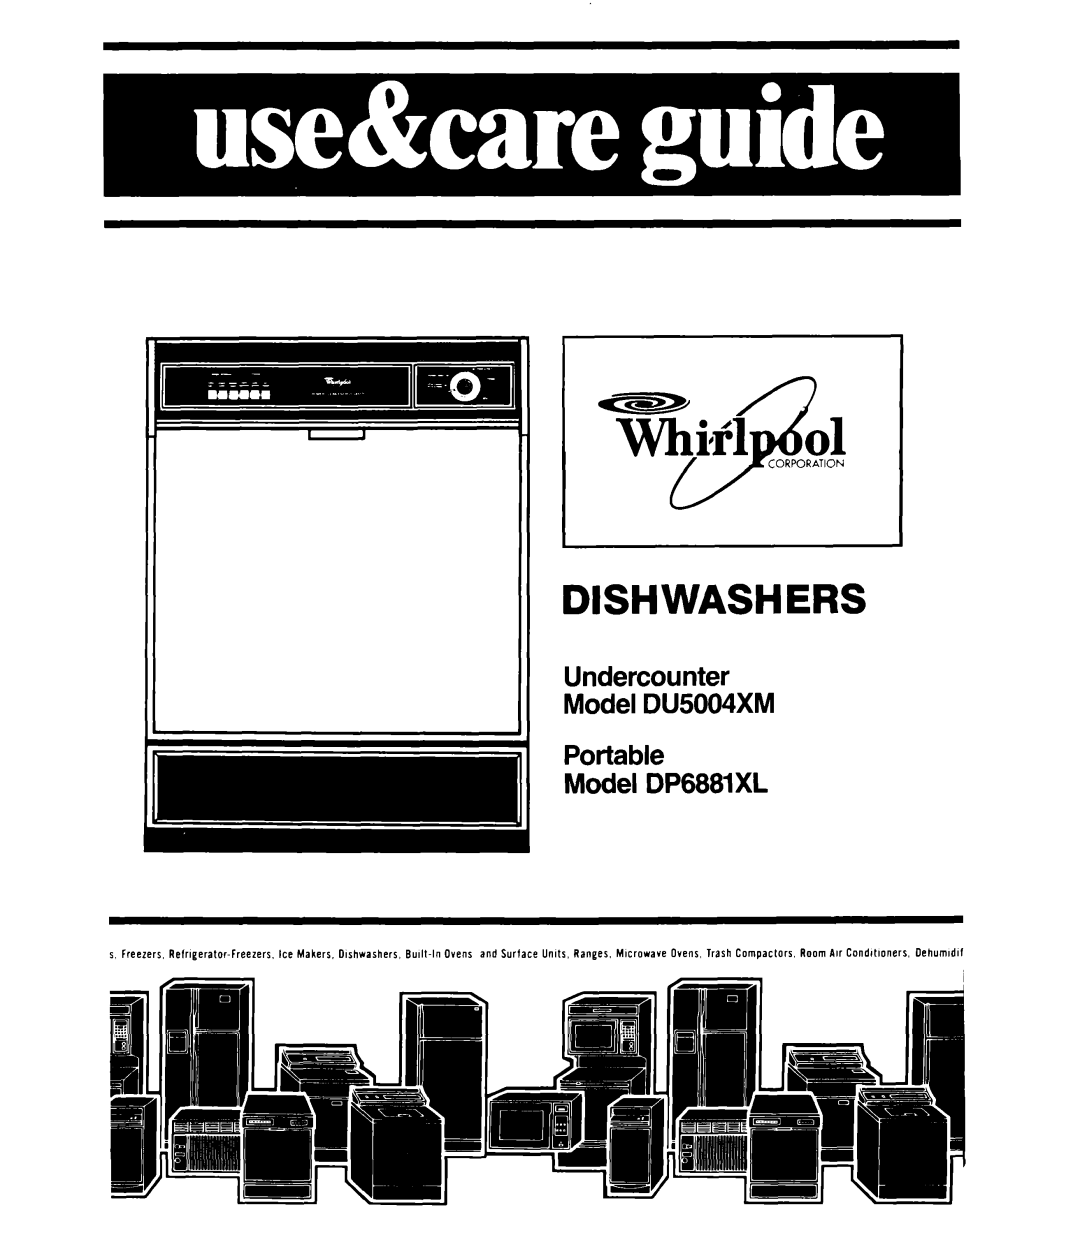 Whirlpool manual Dishwashers, Undercounter Model DU5004XM Portable, Model DP6881XL 